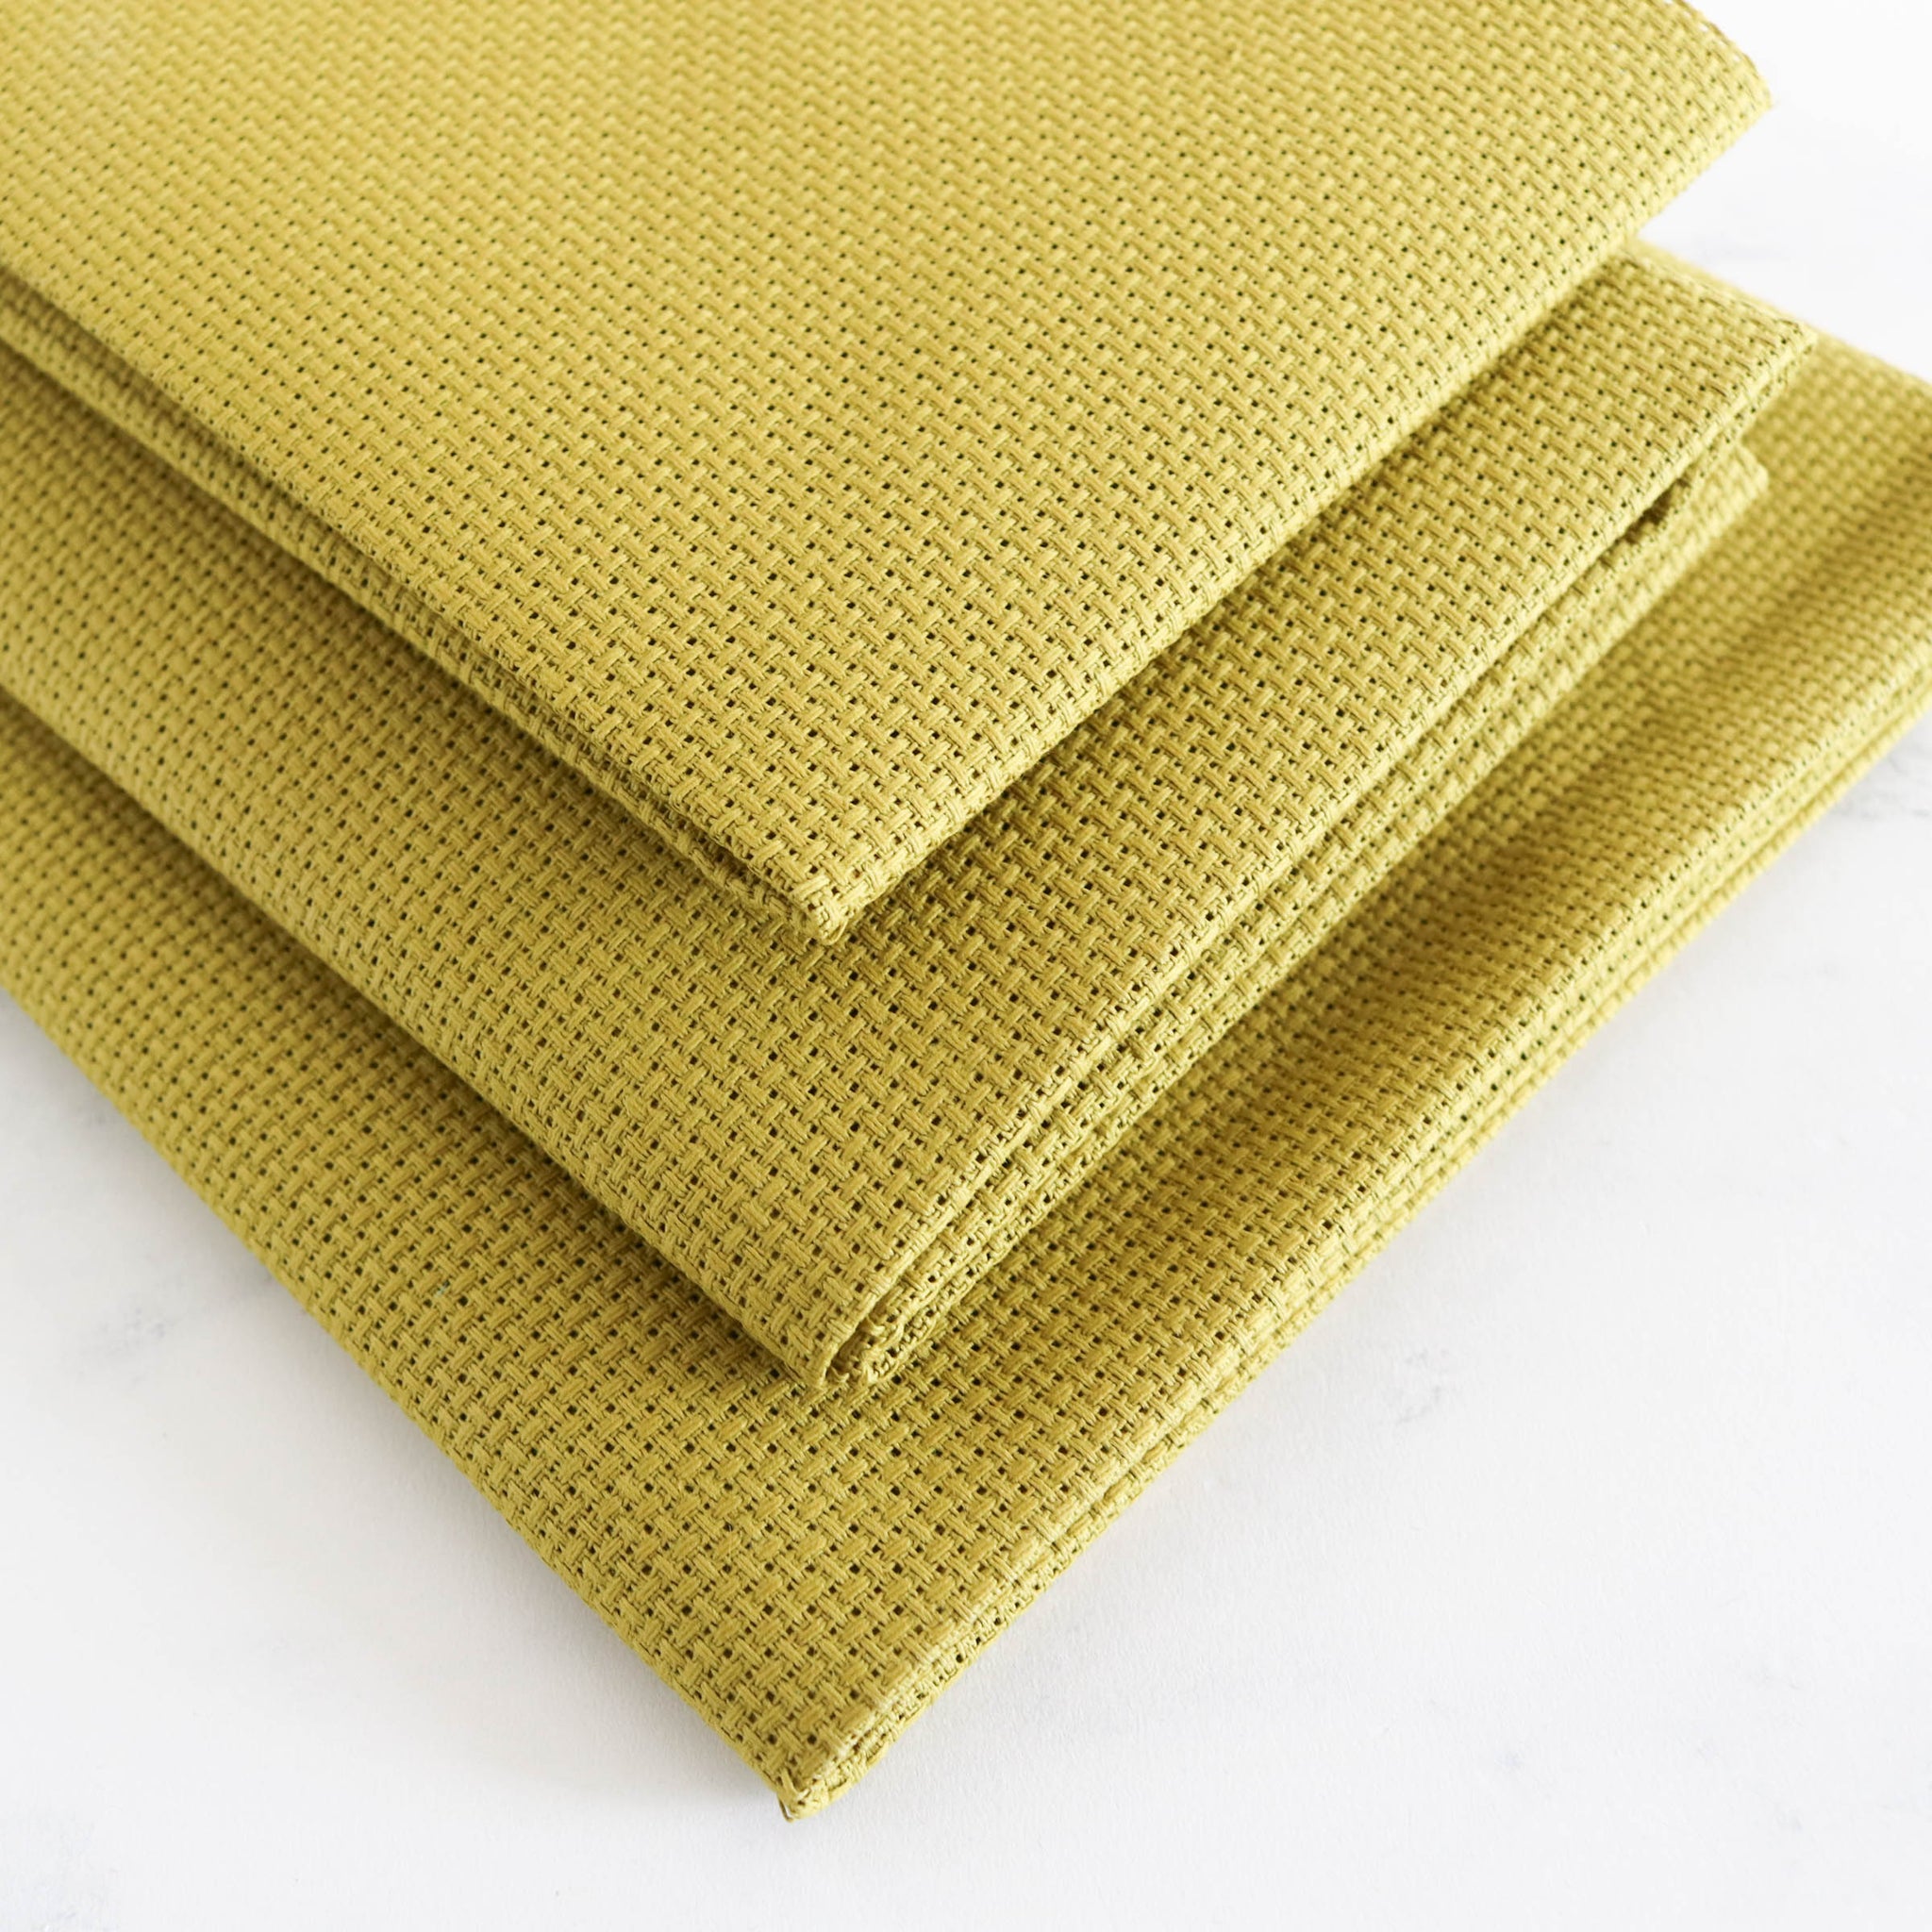 Riviera Olive Aida Cross Stitch Fabric - 14 count - Stitched Modern